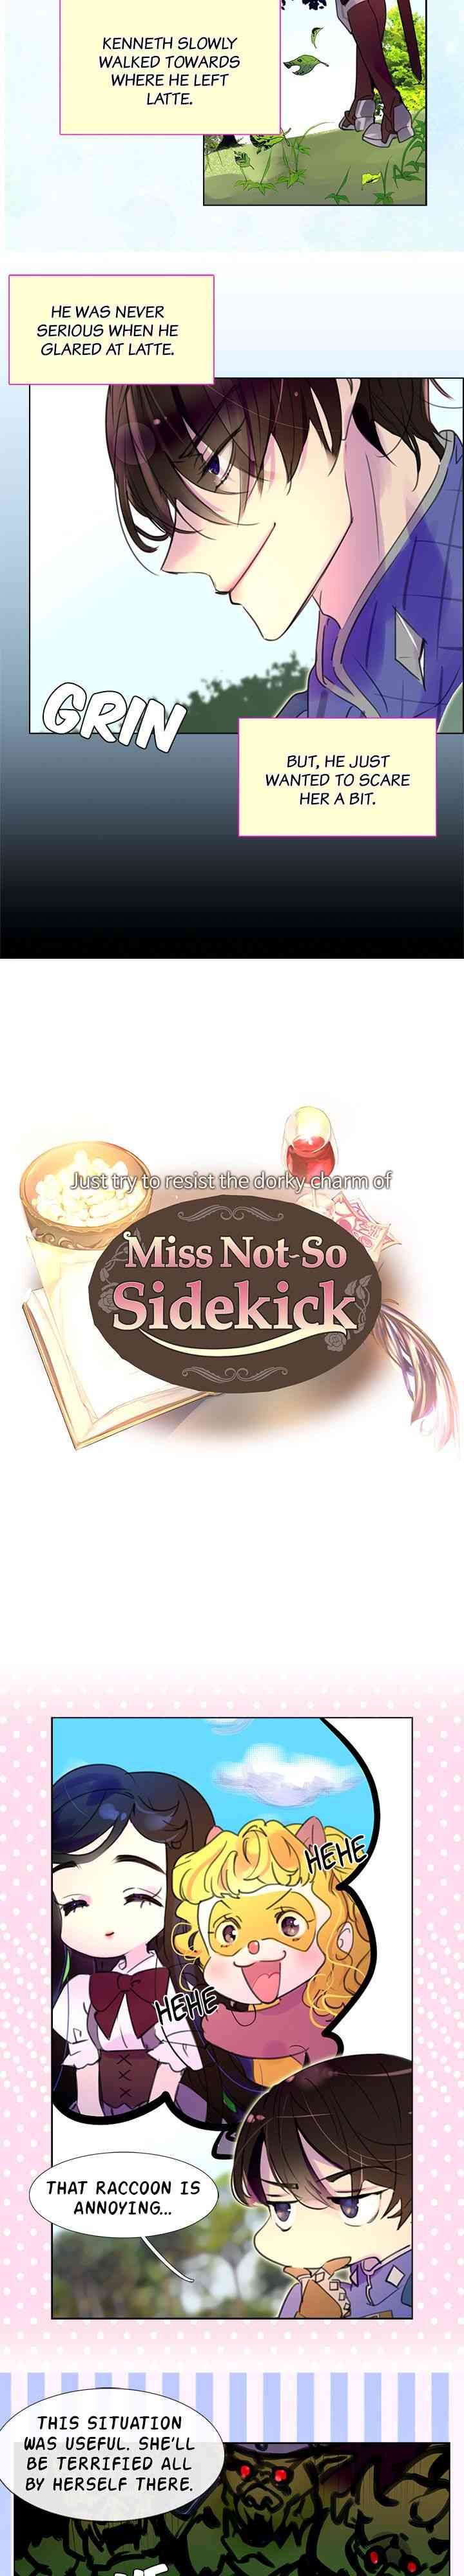 Miss Not-So Sidekick Chapter 21 page 3